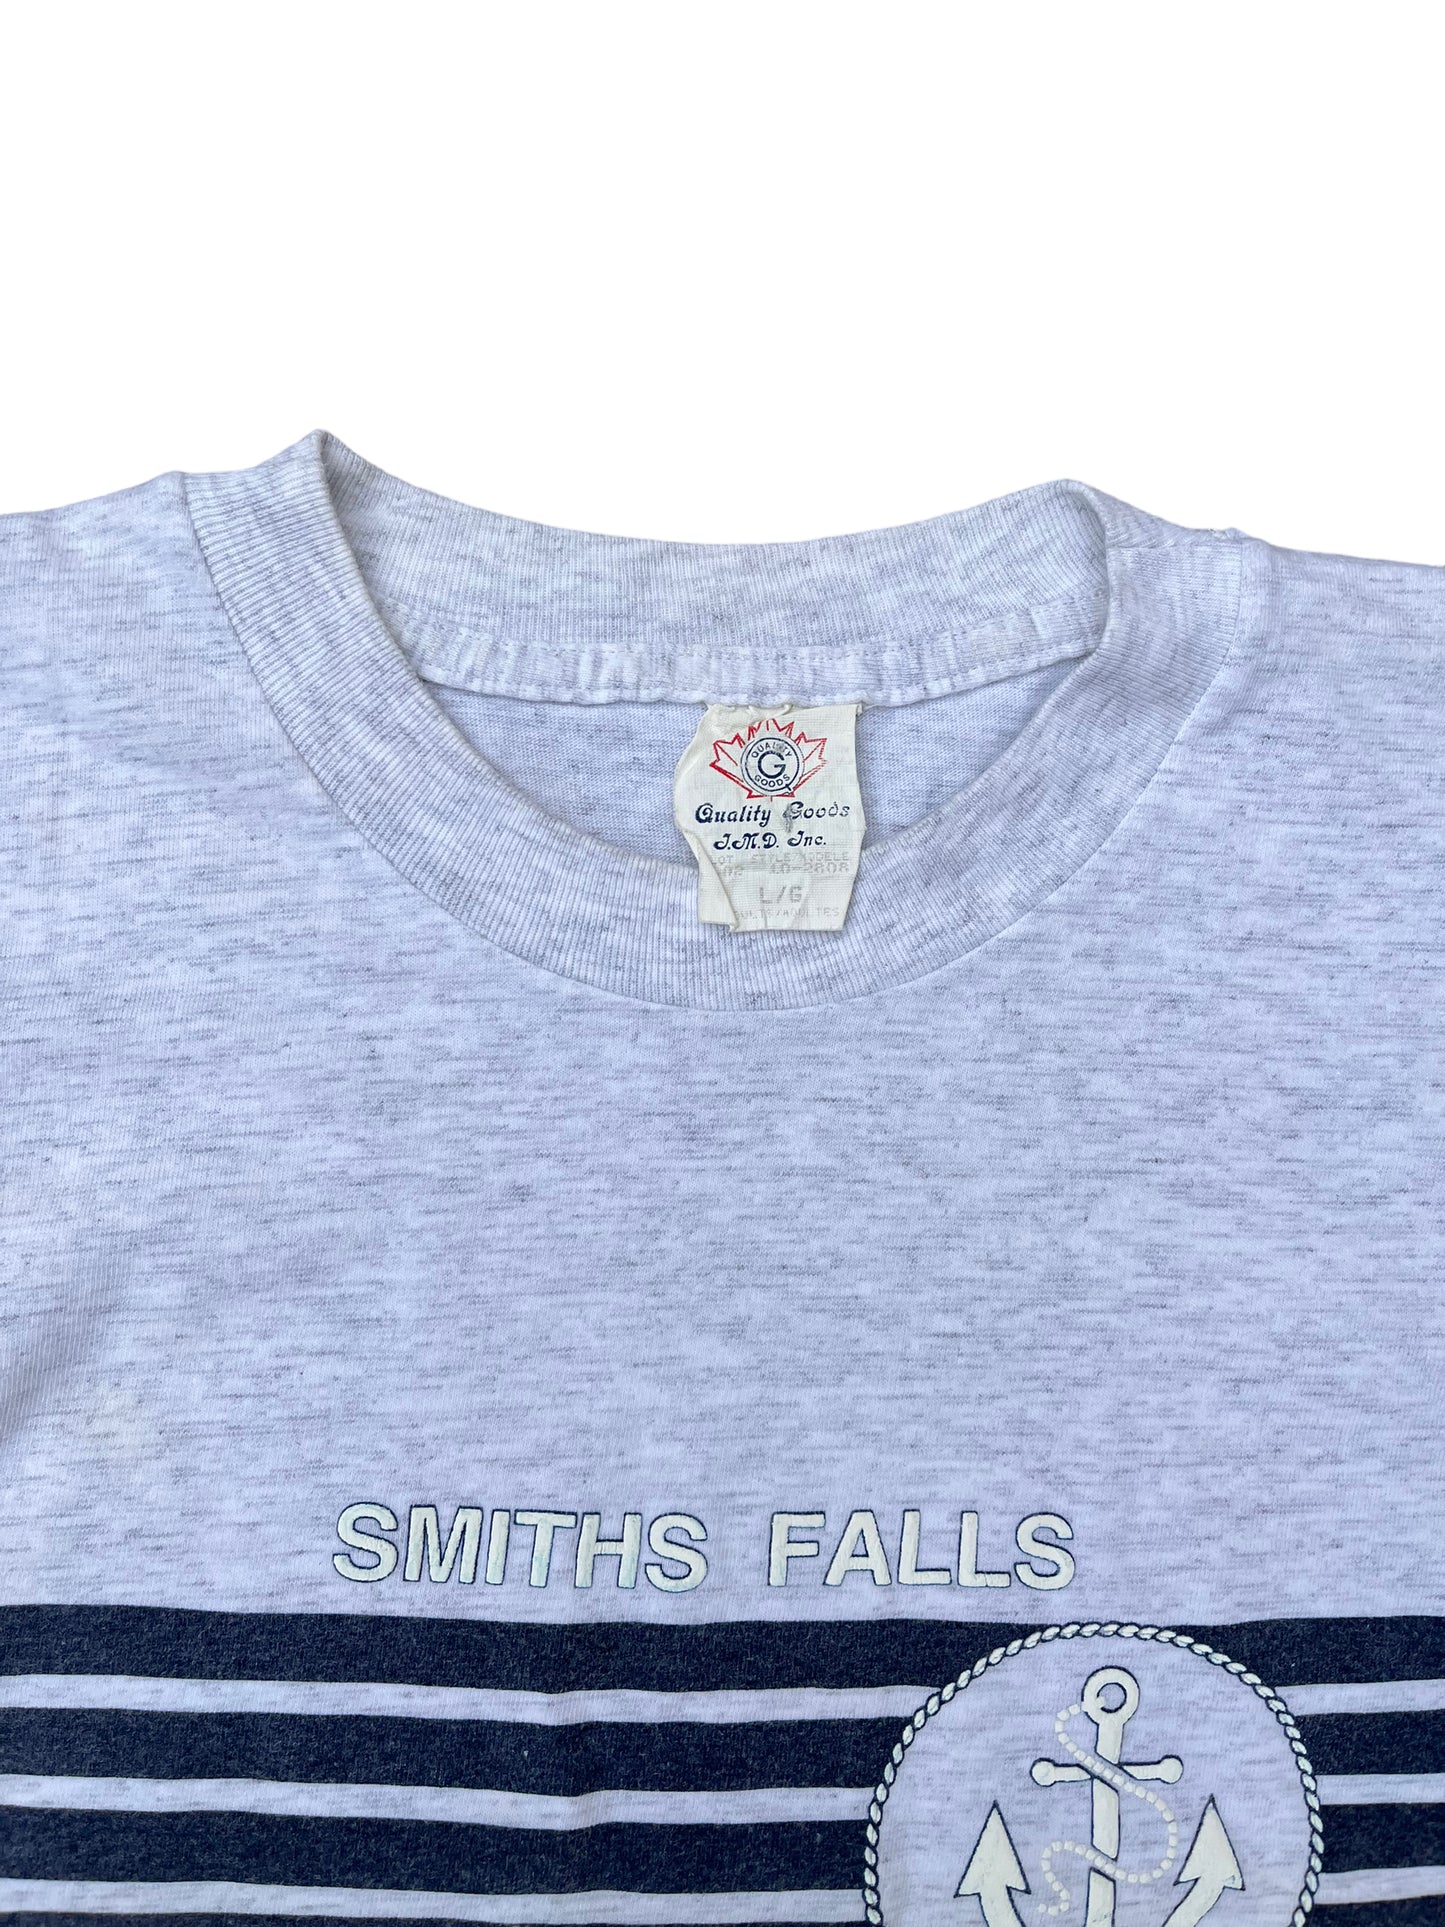 90's Smiths Falls Tee